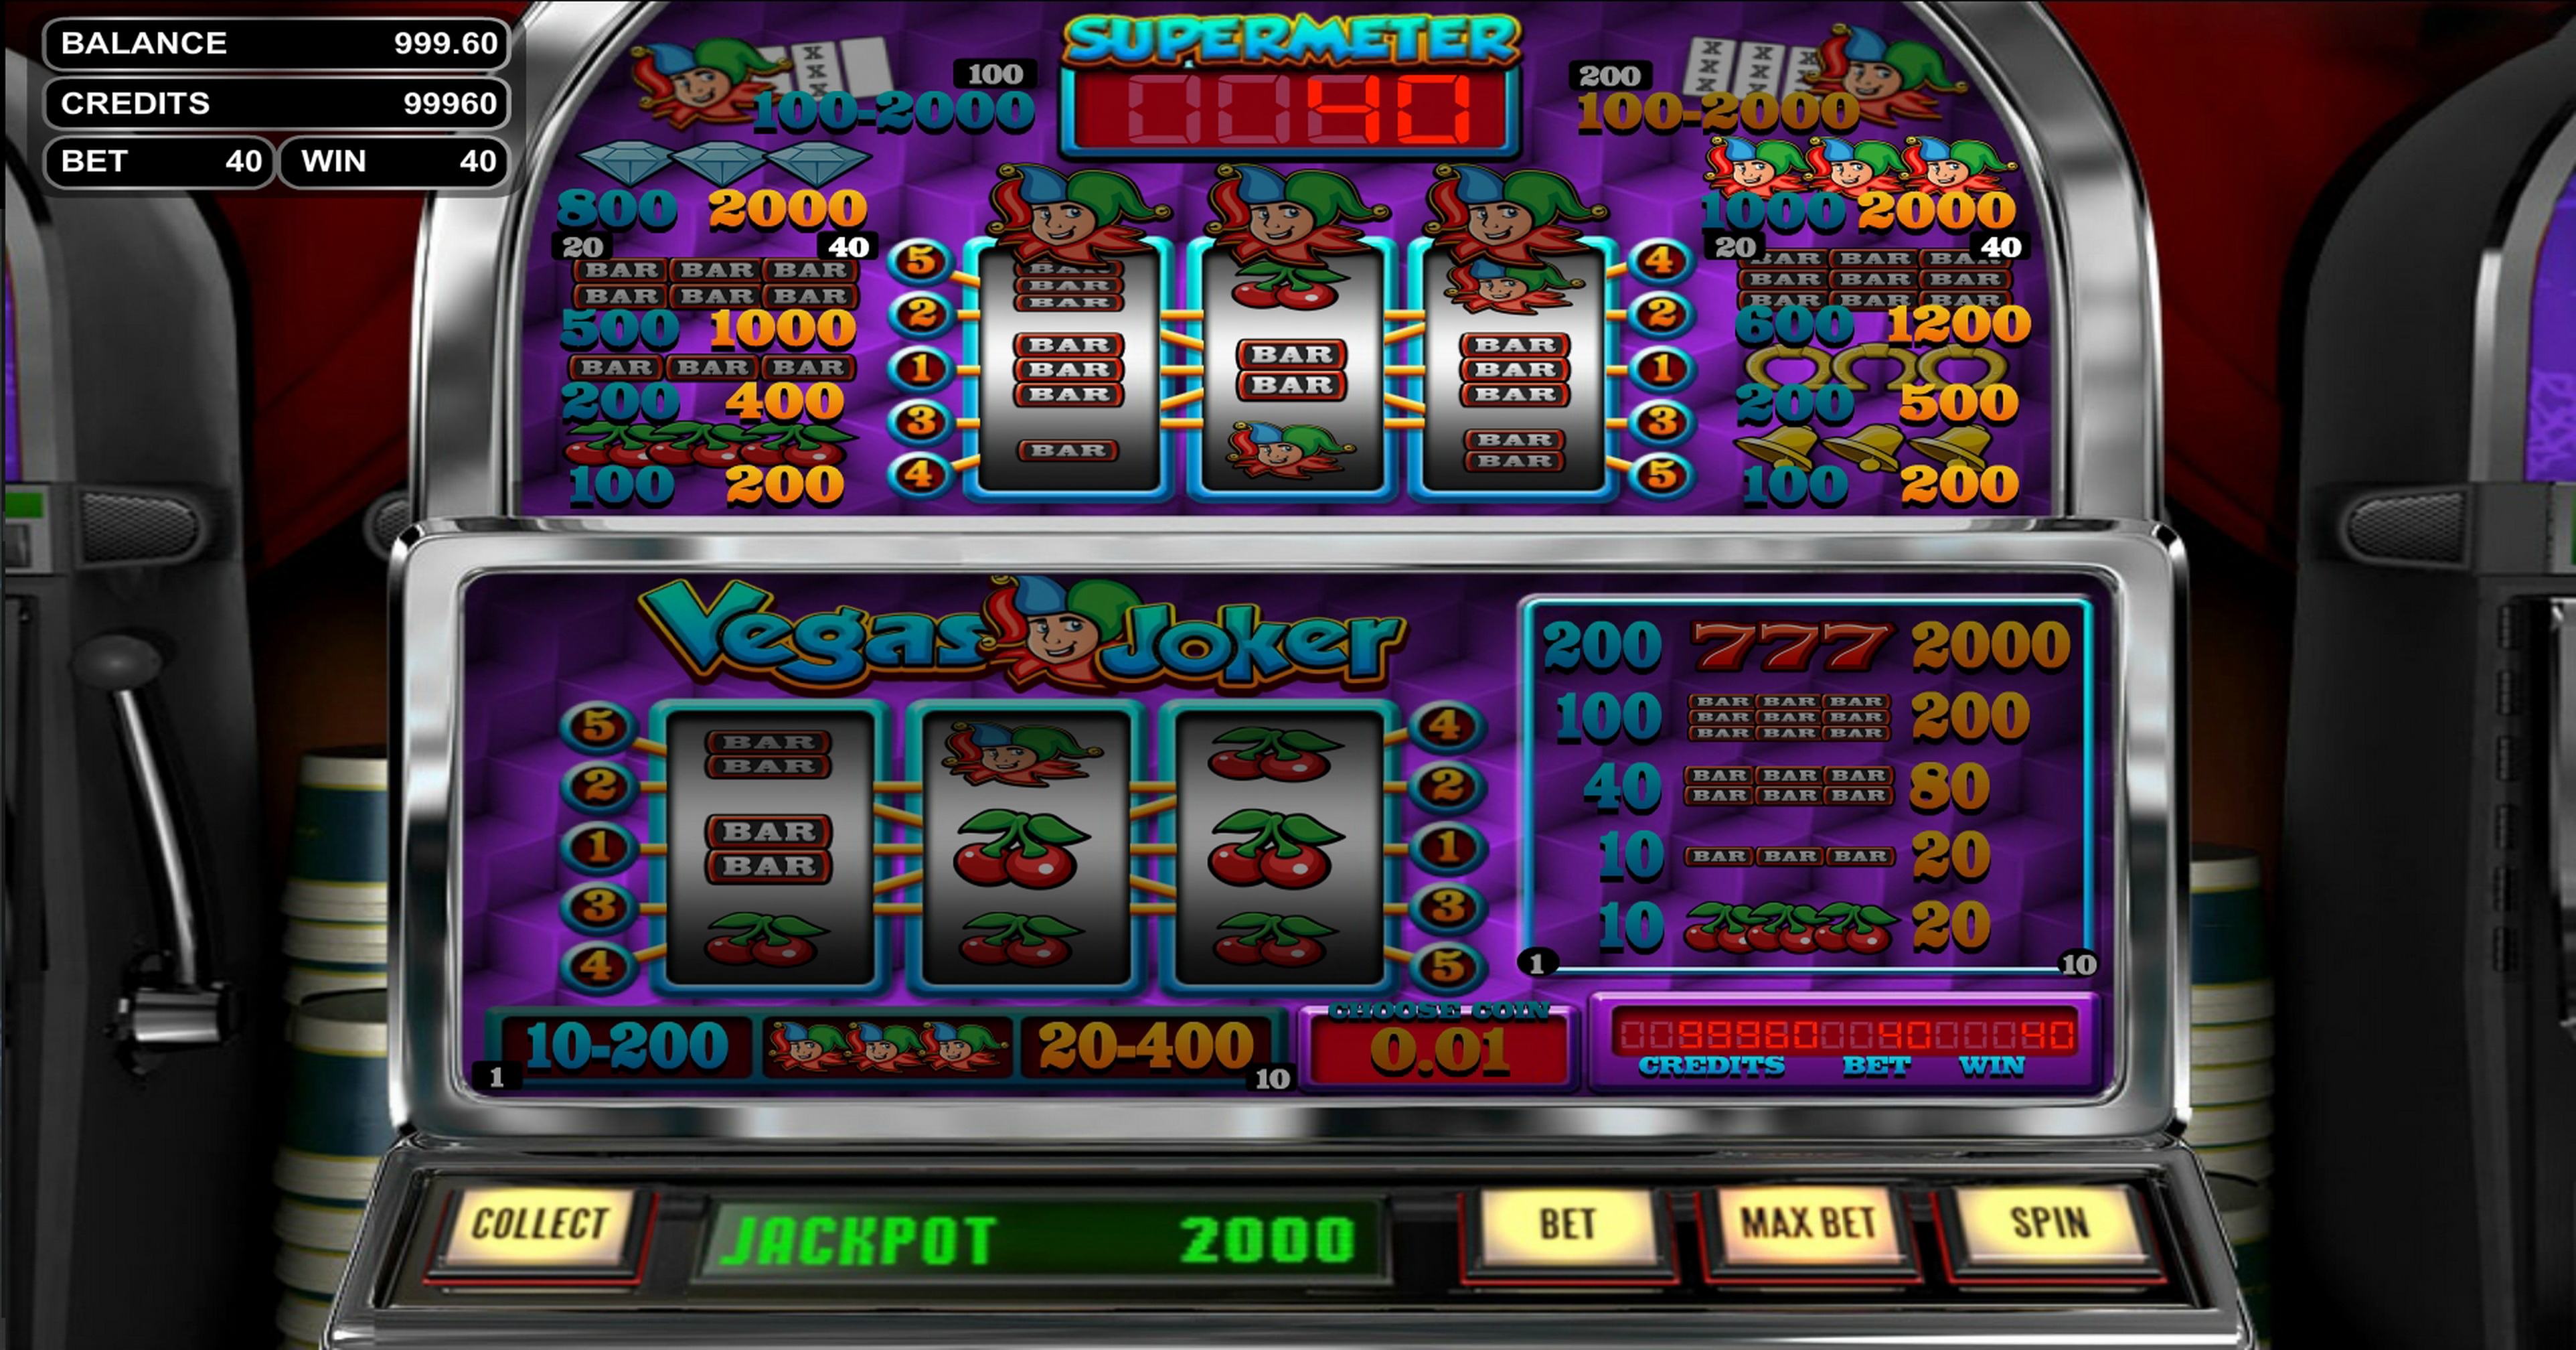 Win Money in Vegas Joker Free Slot Game by Betsoft